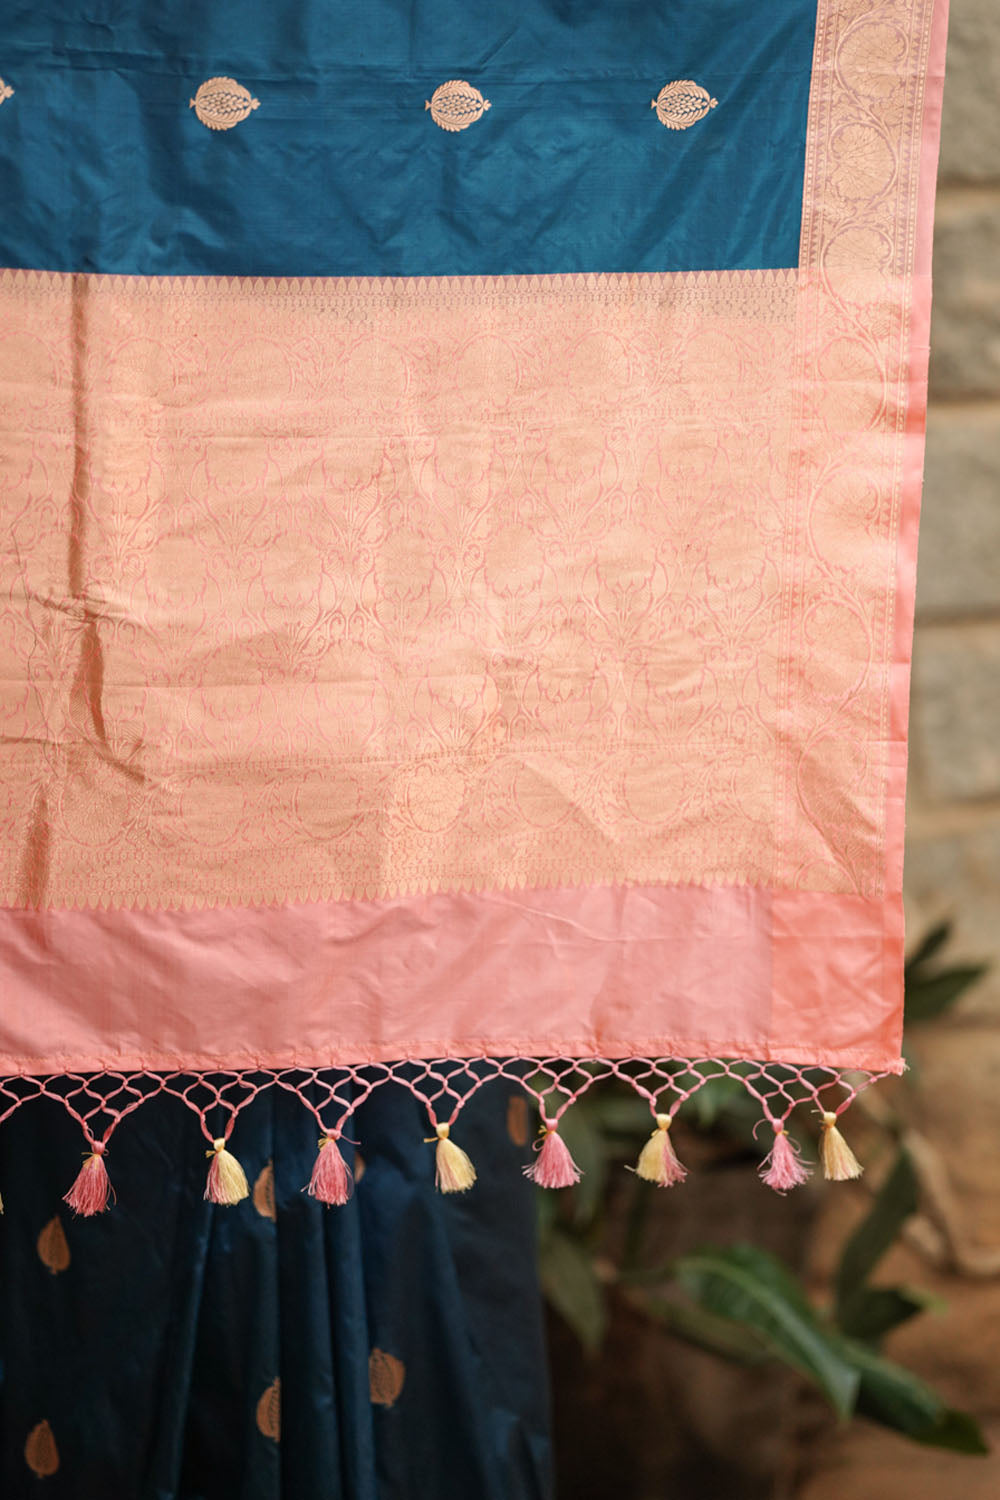 Banarasi Katan Silk Saree in Peacock Blue & Pink with Damask Motifs | SILK MARK CERTIFIED